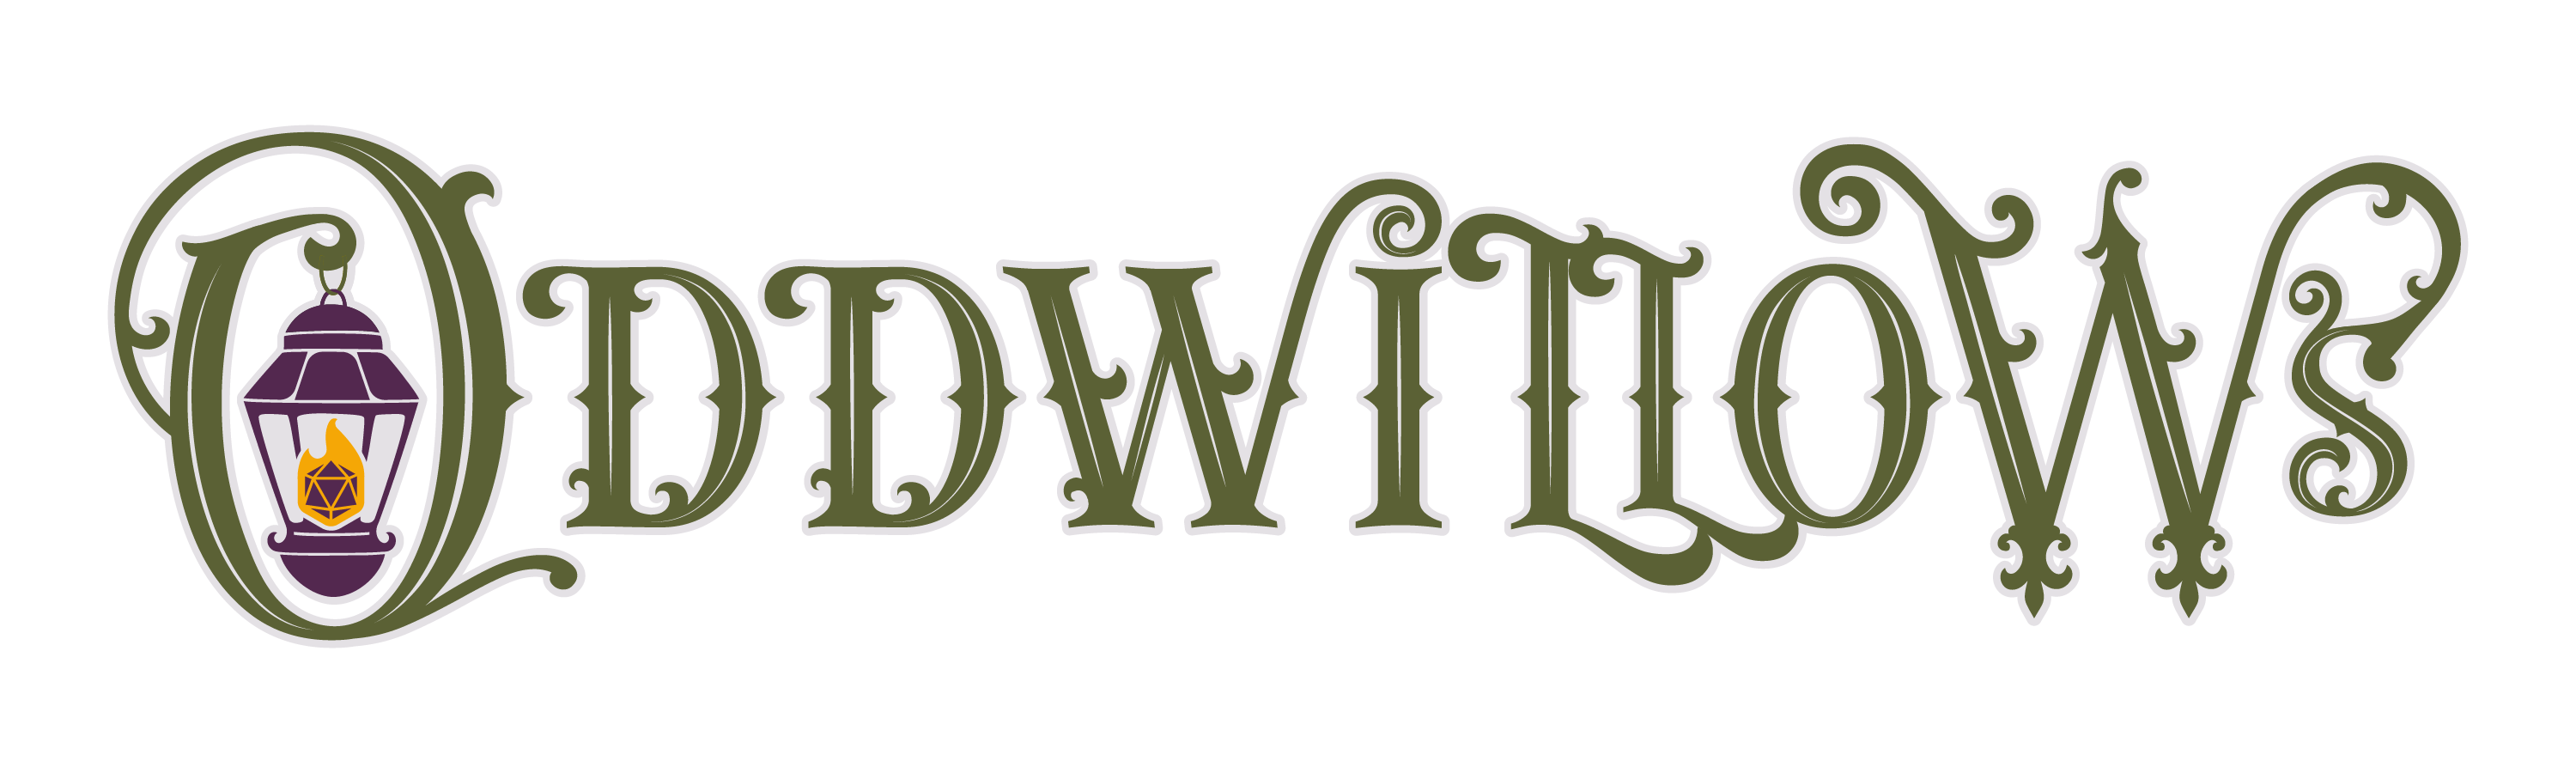 Oddwillow's logo